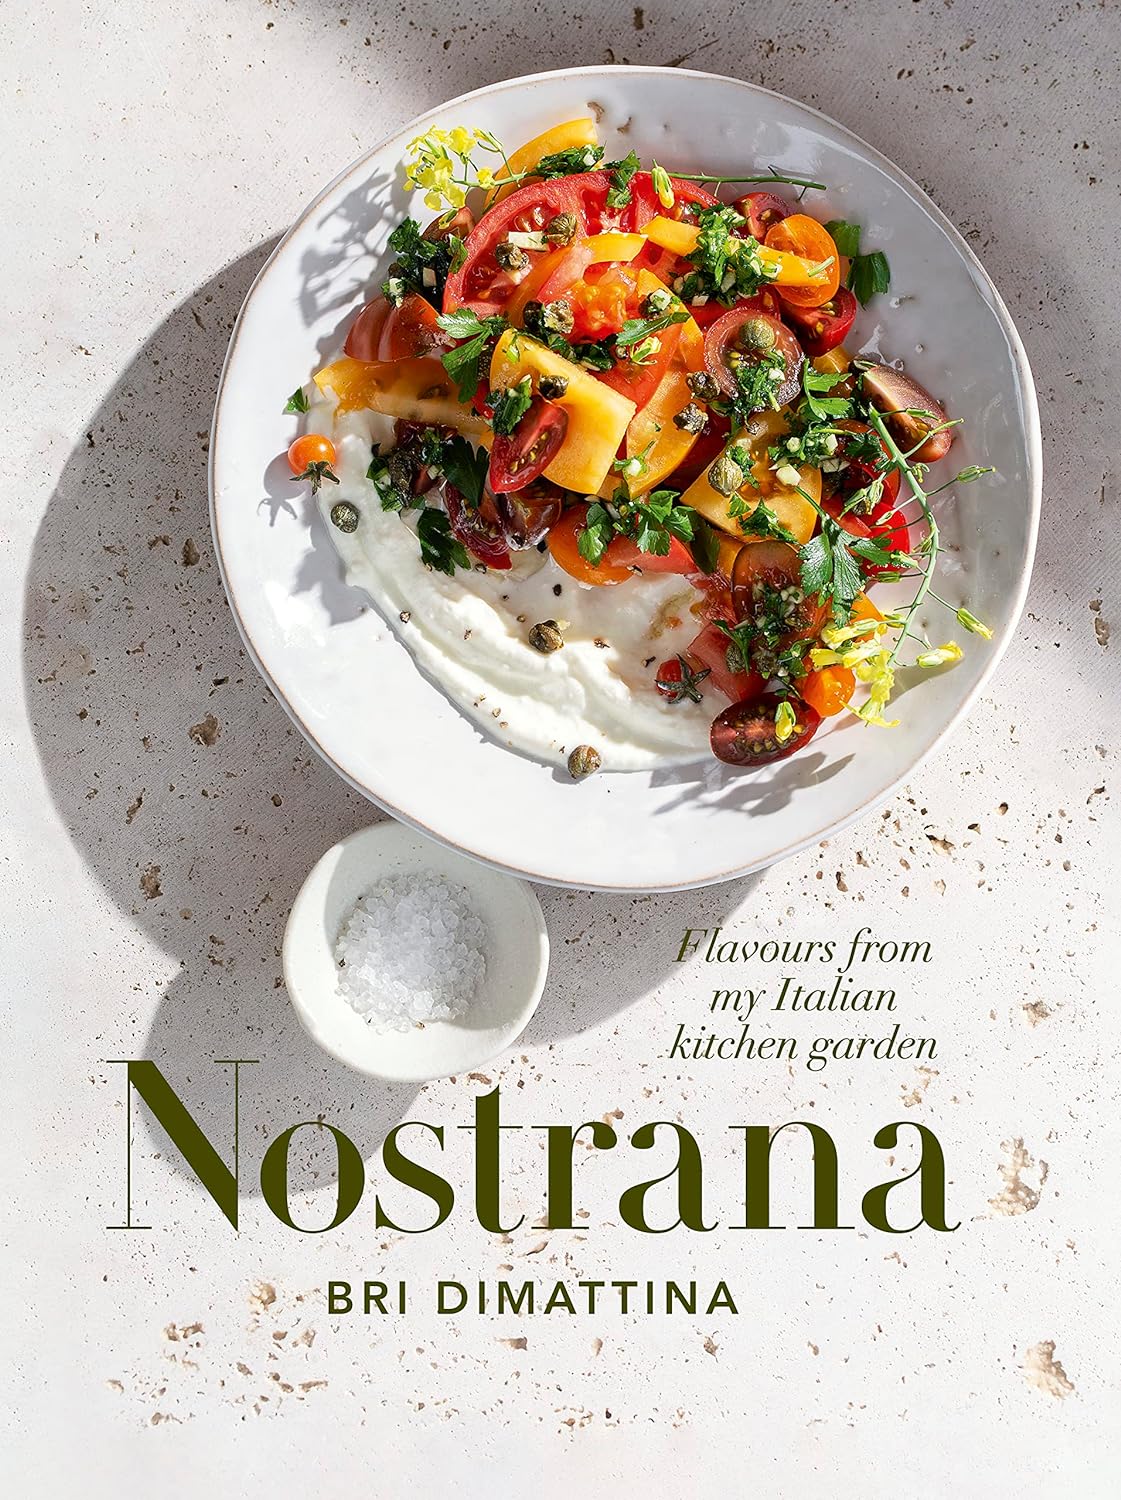 Nostrana: Flavours from my Italian kitchen garden (Bri DiMattina)